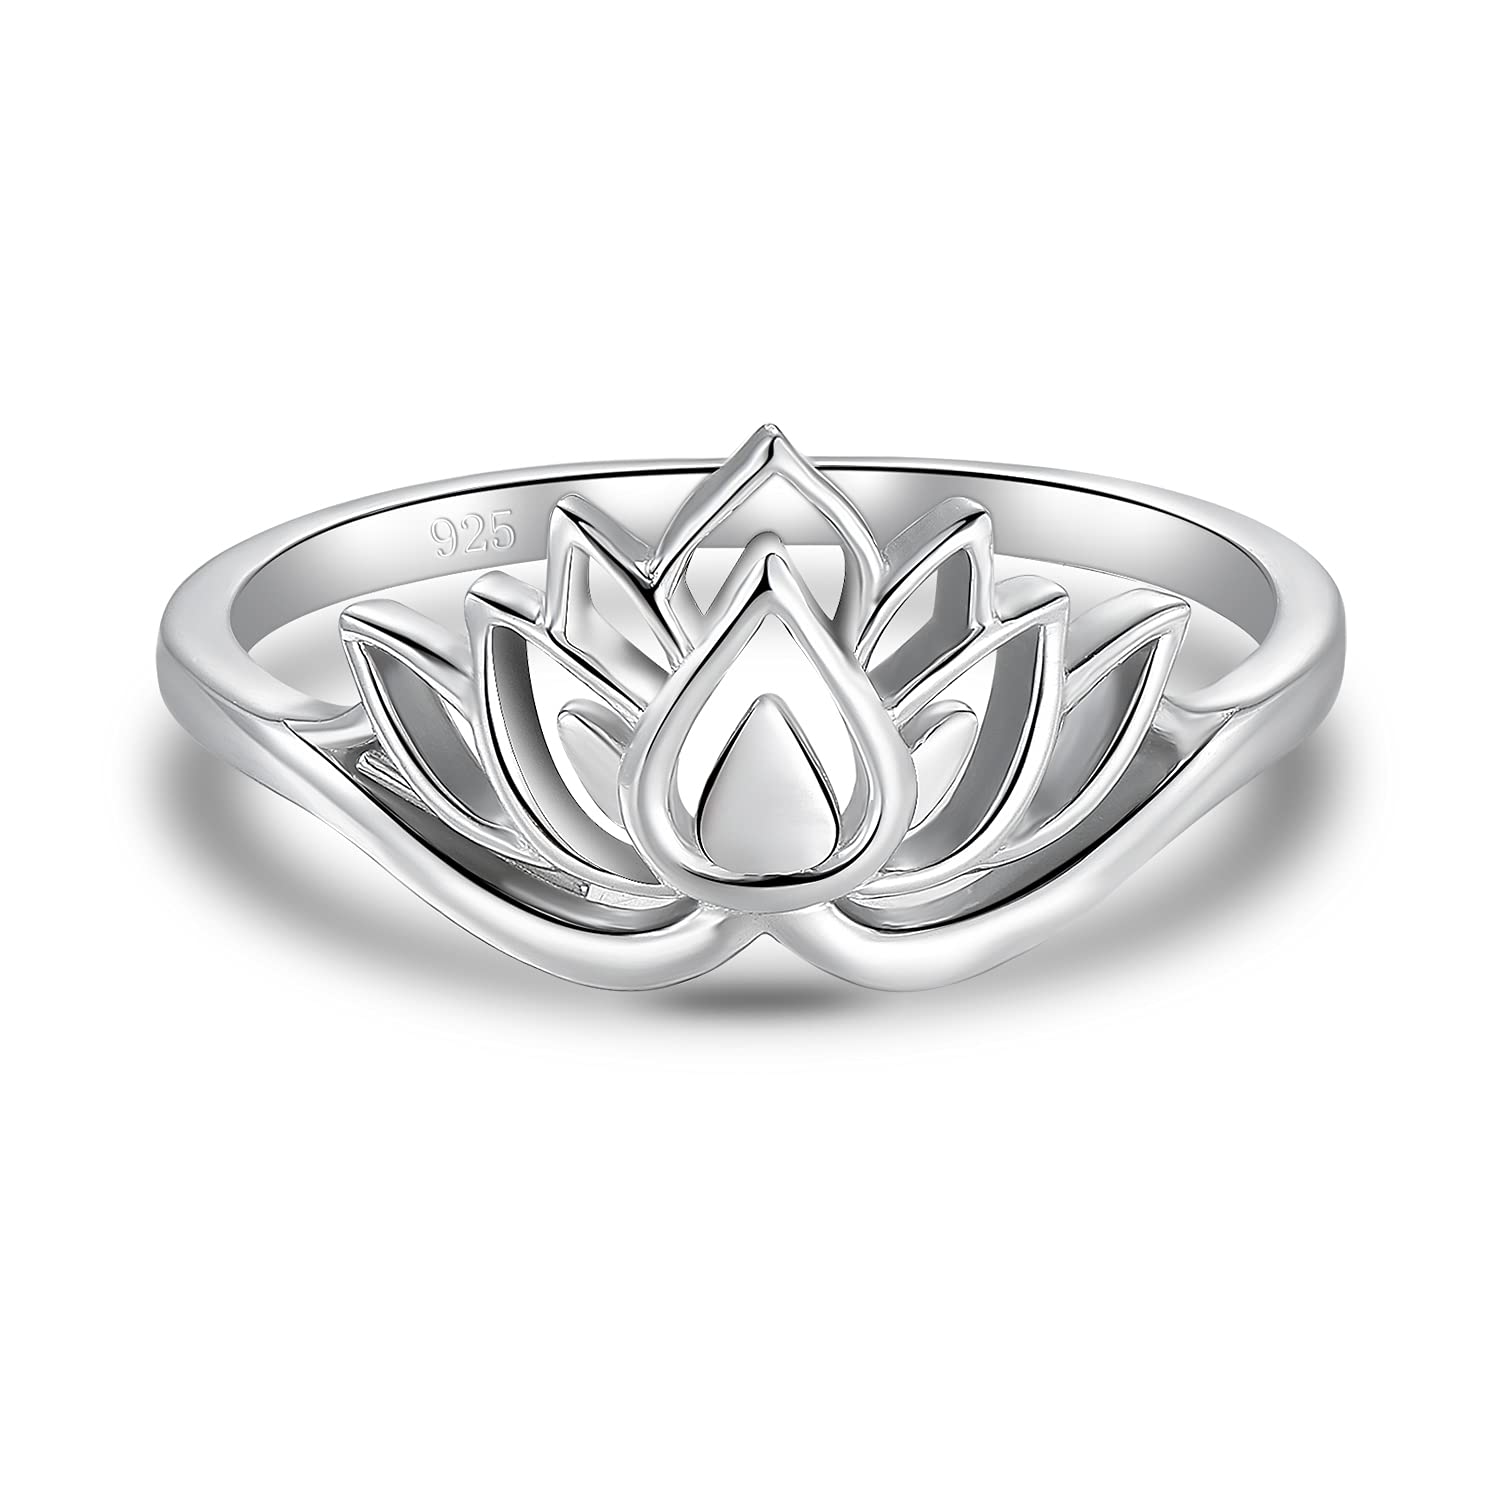 BORUO 925 Sterling Silver Ring, Lotus Flower Yoga High Polish Tarnish Resistant Comfort Fit Wedding Band Ring